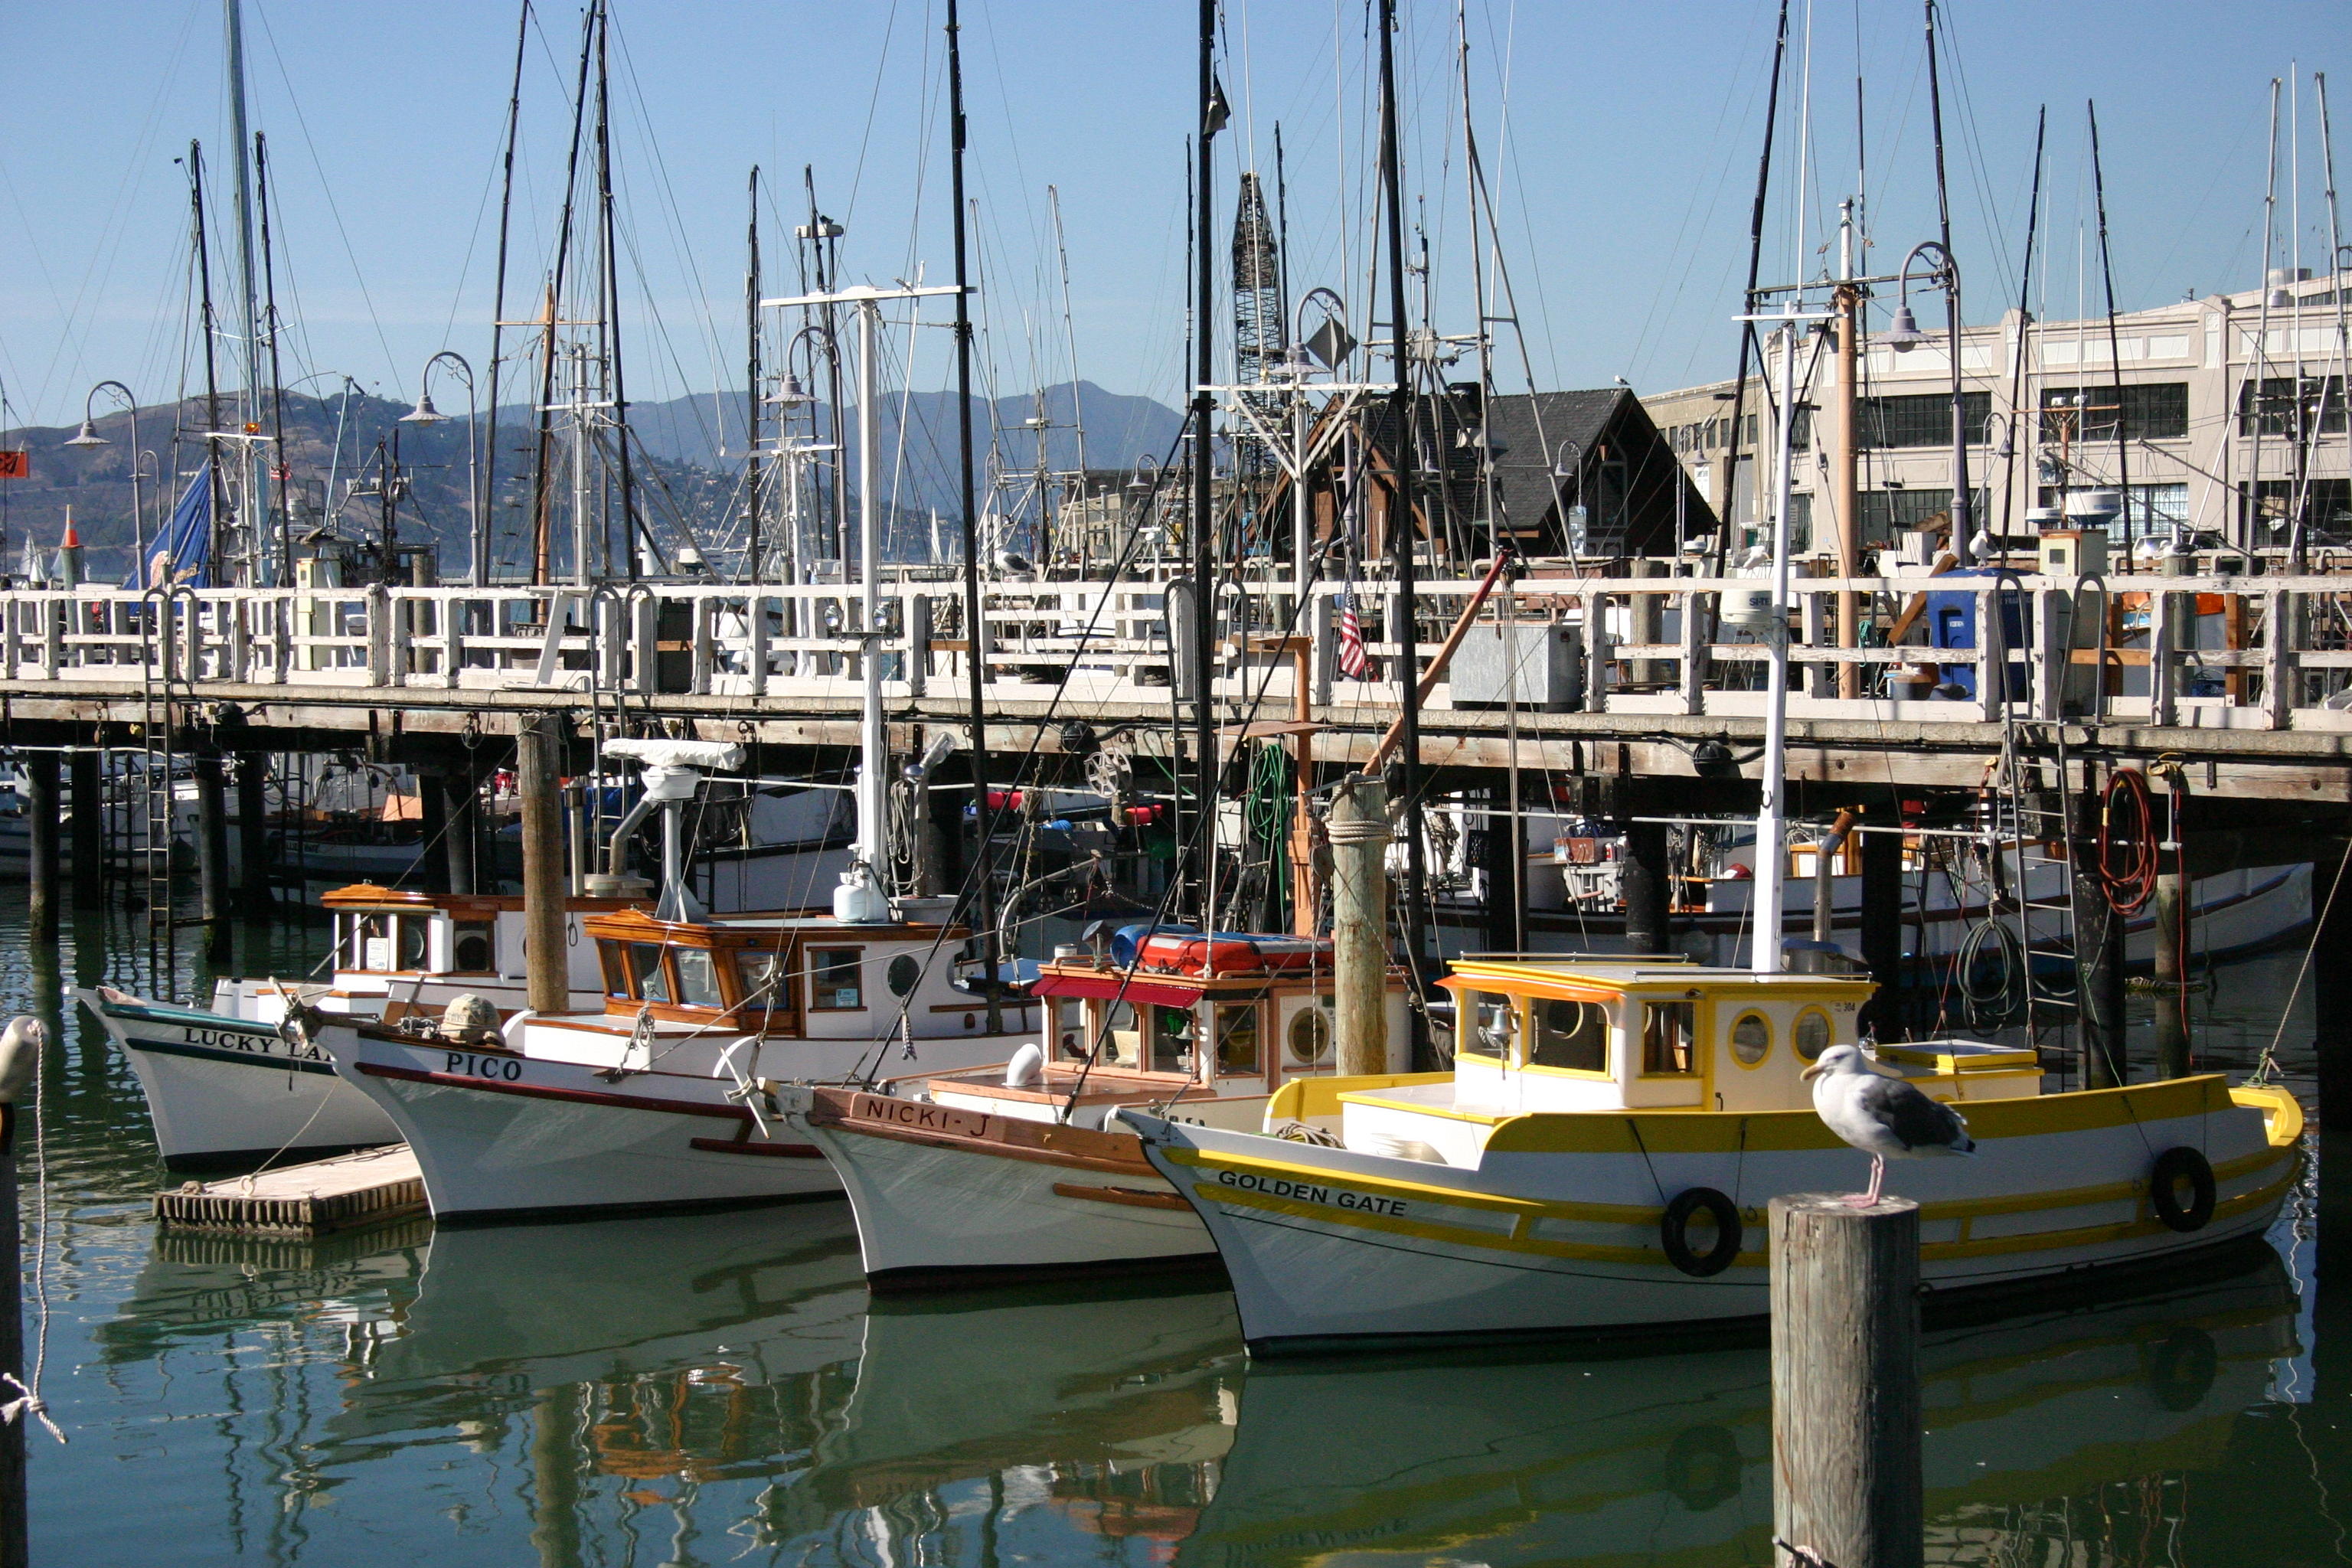 Fisherman's Wharf of San Francisco